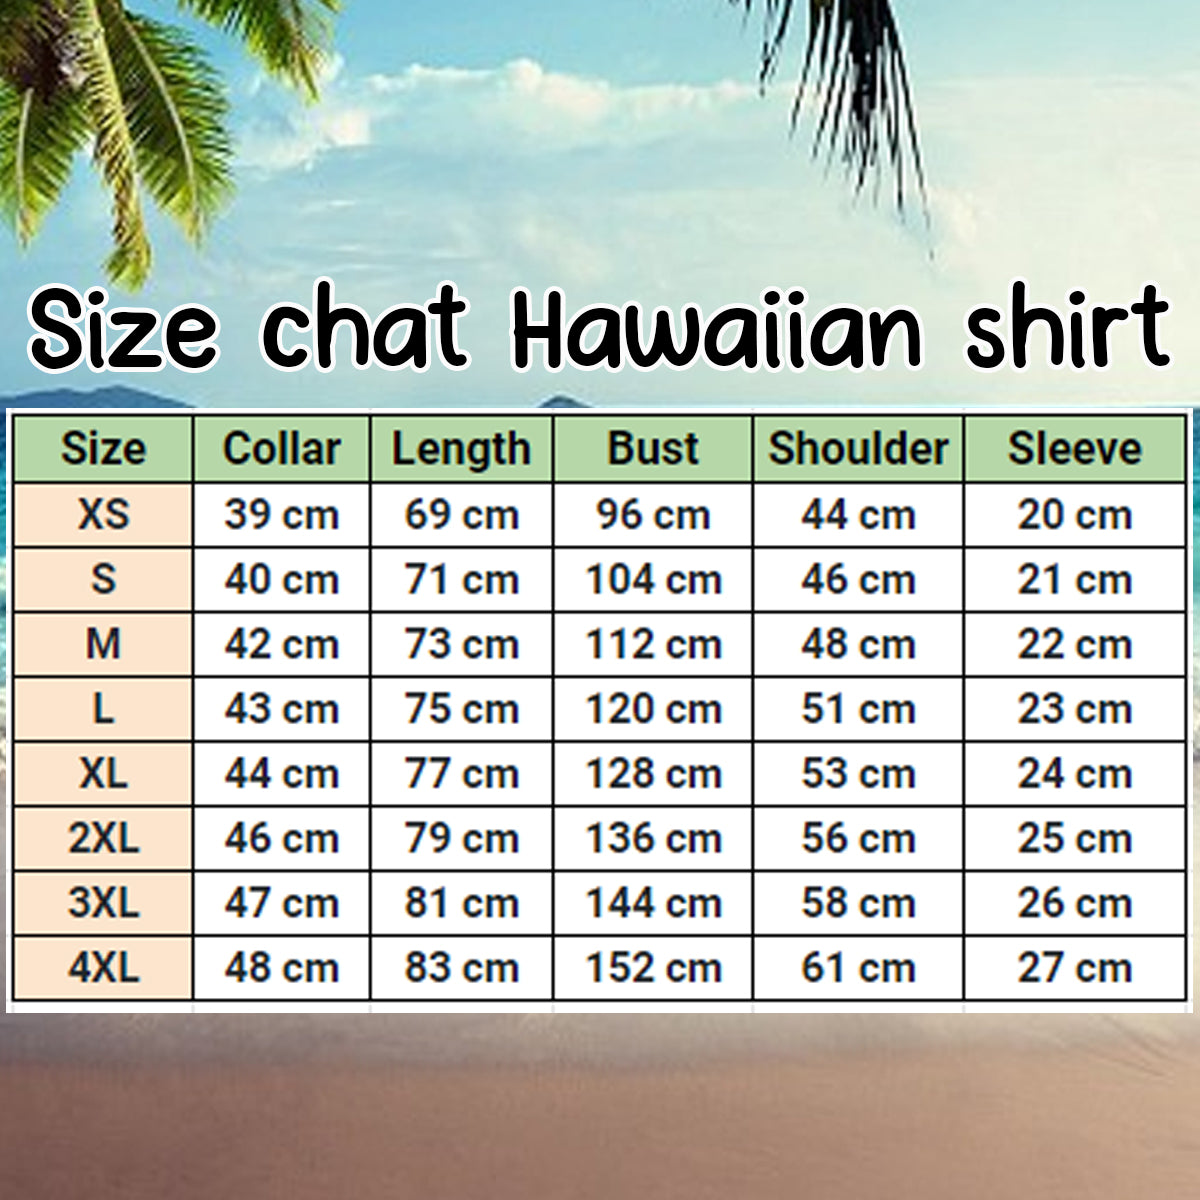 Schnoodle Hawaiian Shirt/ Hawaii shirt vintage Floral Dog/ Men